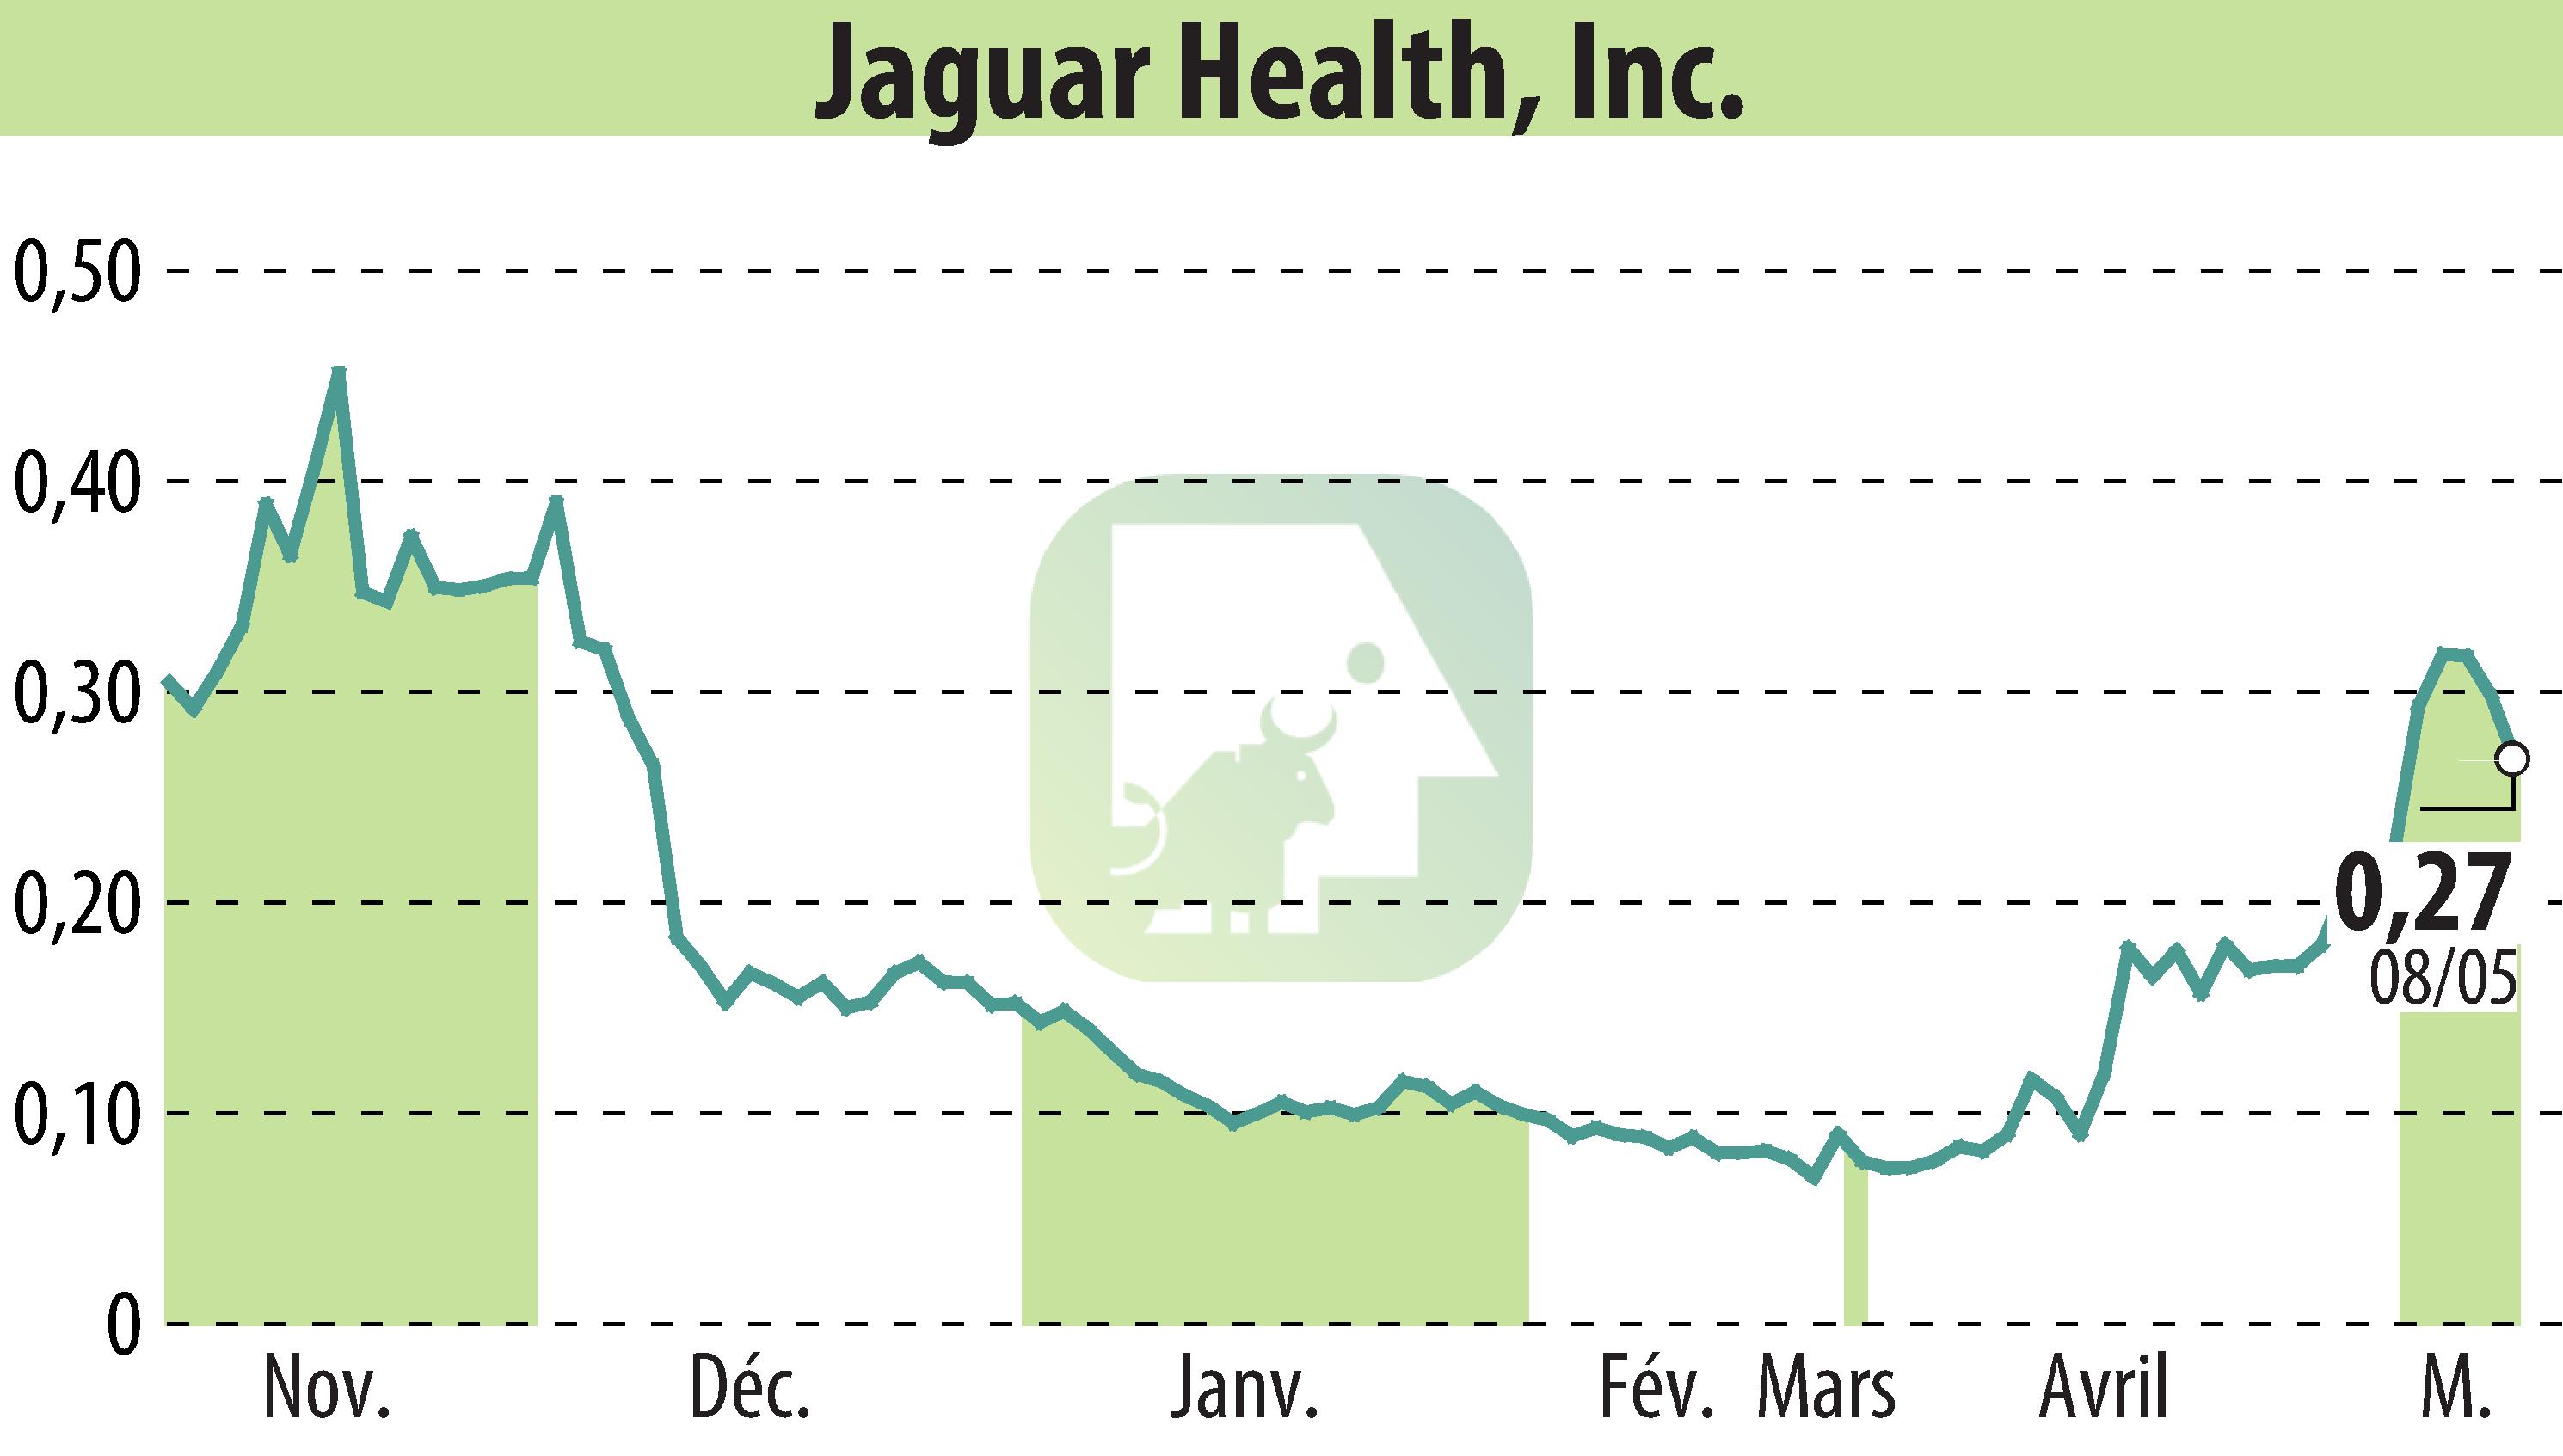 Stock price chart of Jaguar Health, Inc. (EBR:JAGX) showing fluctuations.